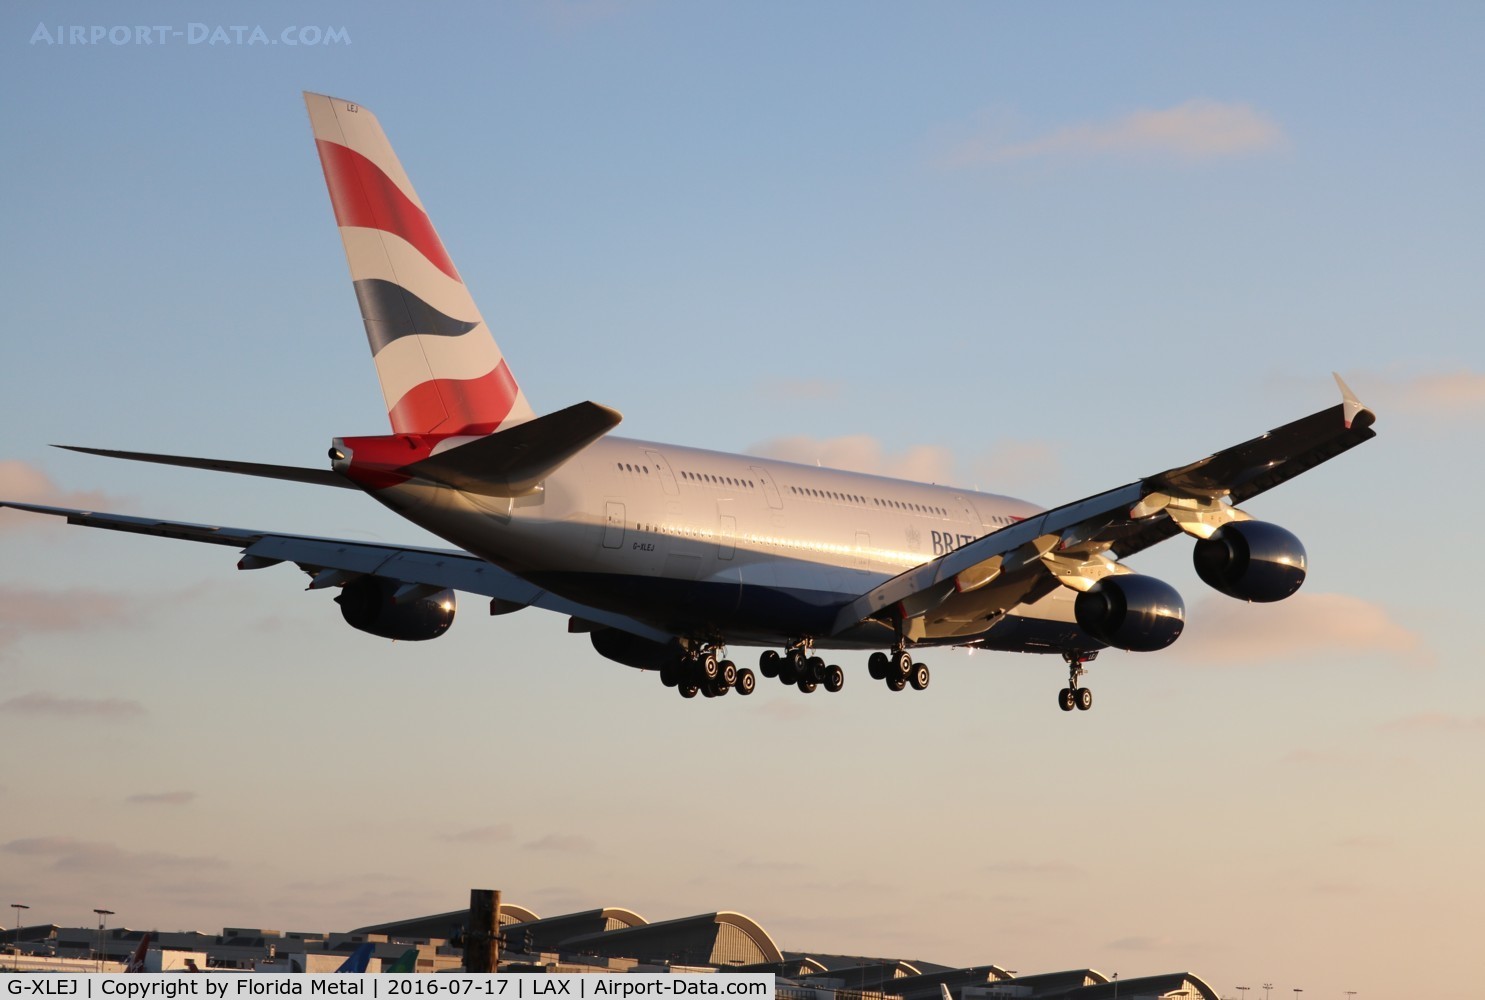 G-XLEJ, 2015 Airbus A380-841 C/N 192, British Airways